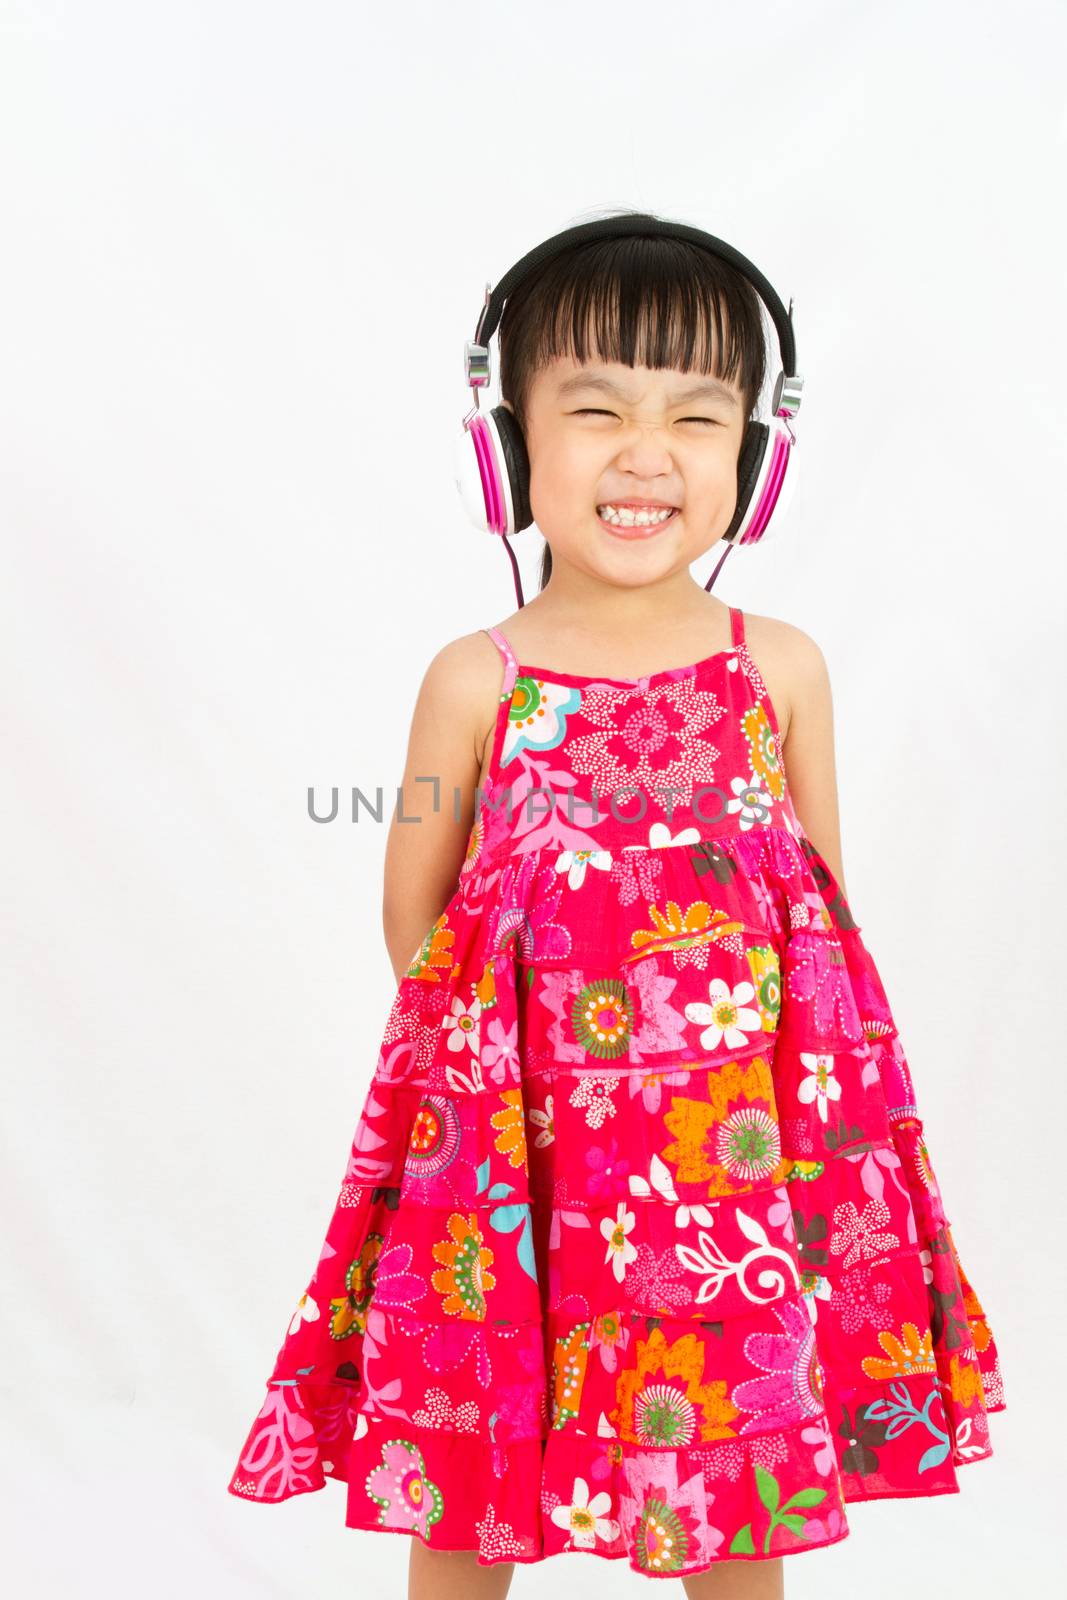 Chinese little girl on headphones by kiankhoon